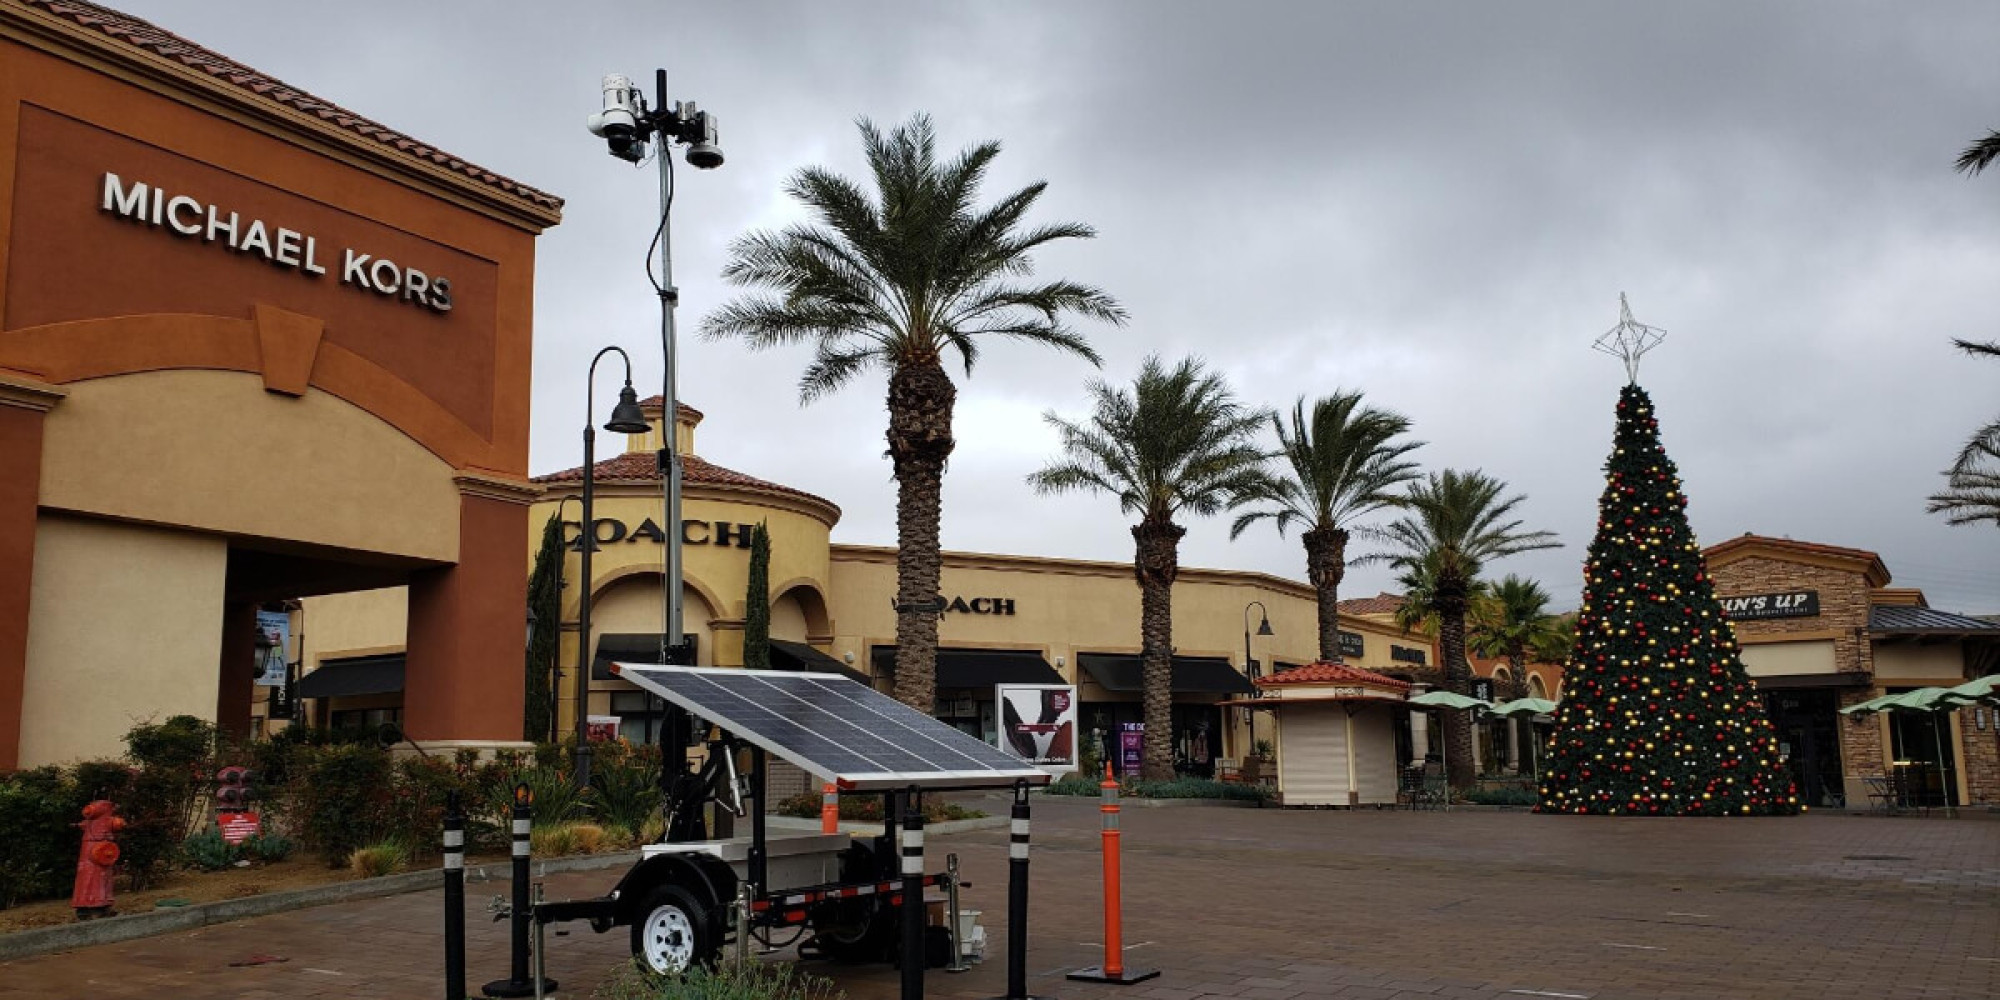 Solar Surveillance Trailer at Retail Lot